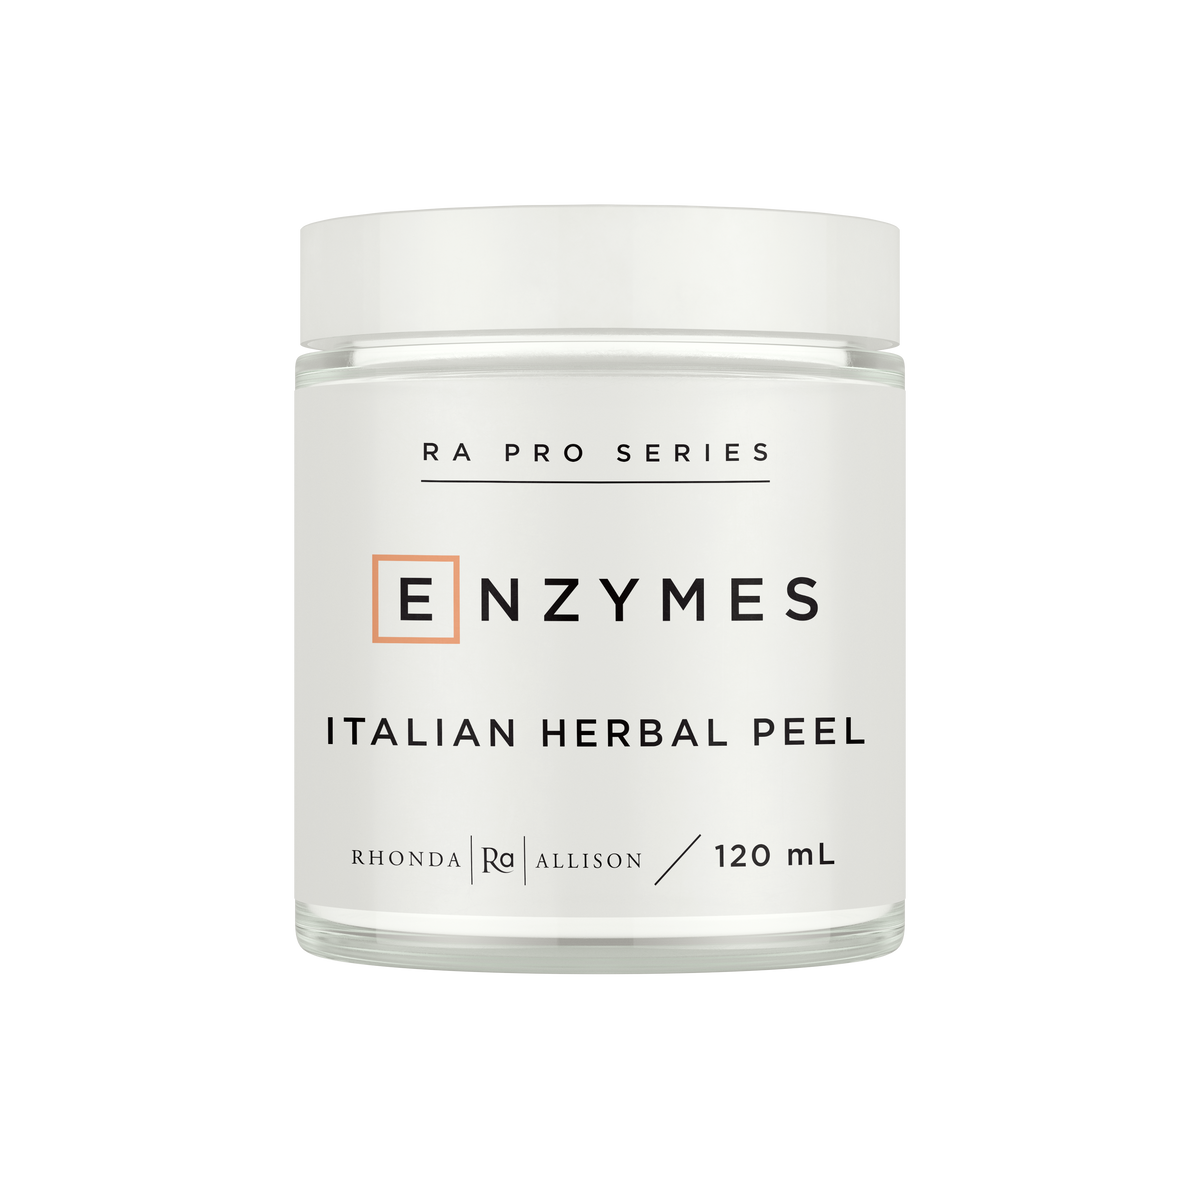 Italian Herbal Peel – Reformulated!